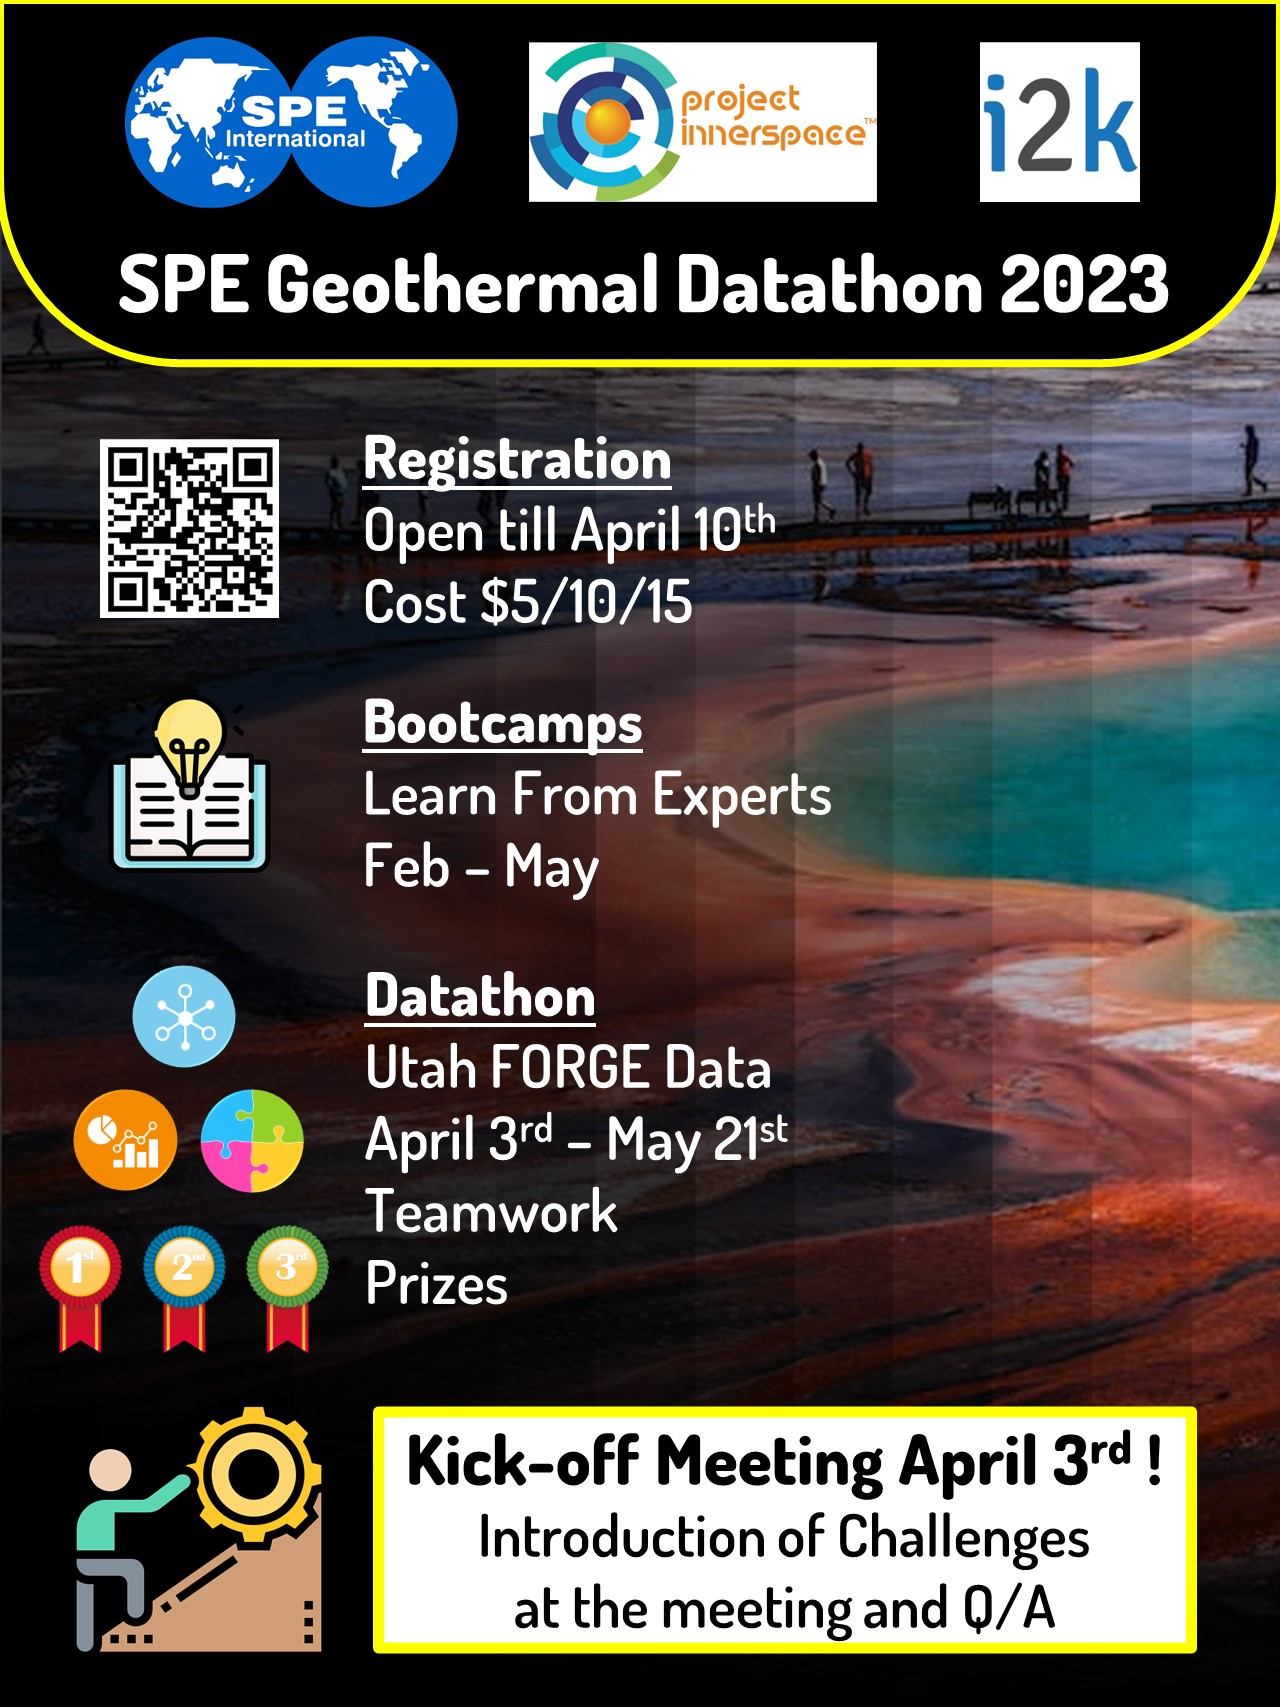 jpeg-spe-geothermal-datathon-flyer-with-sponsors-final